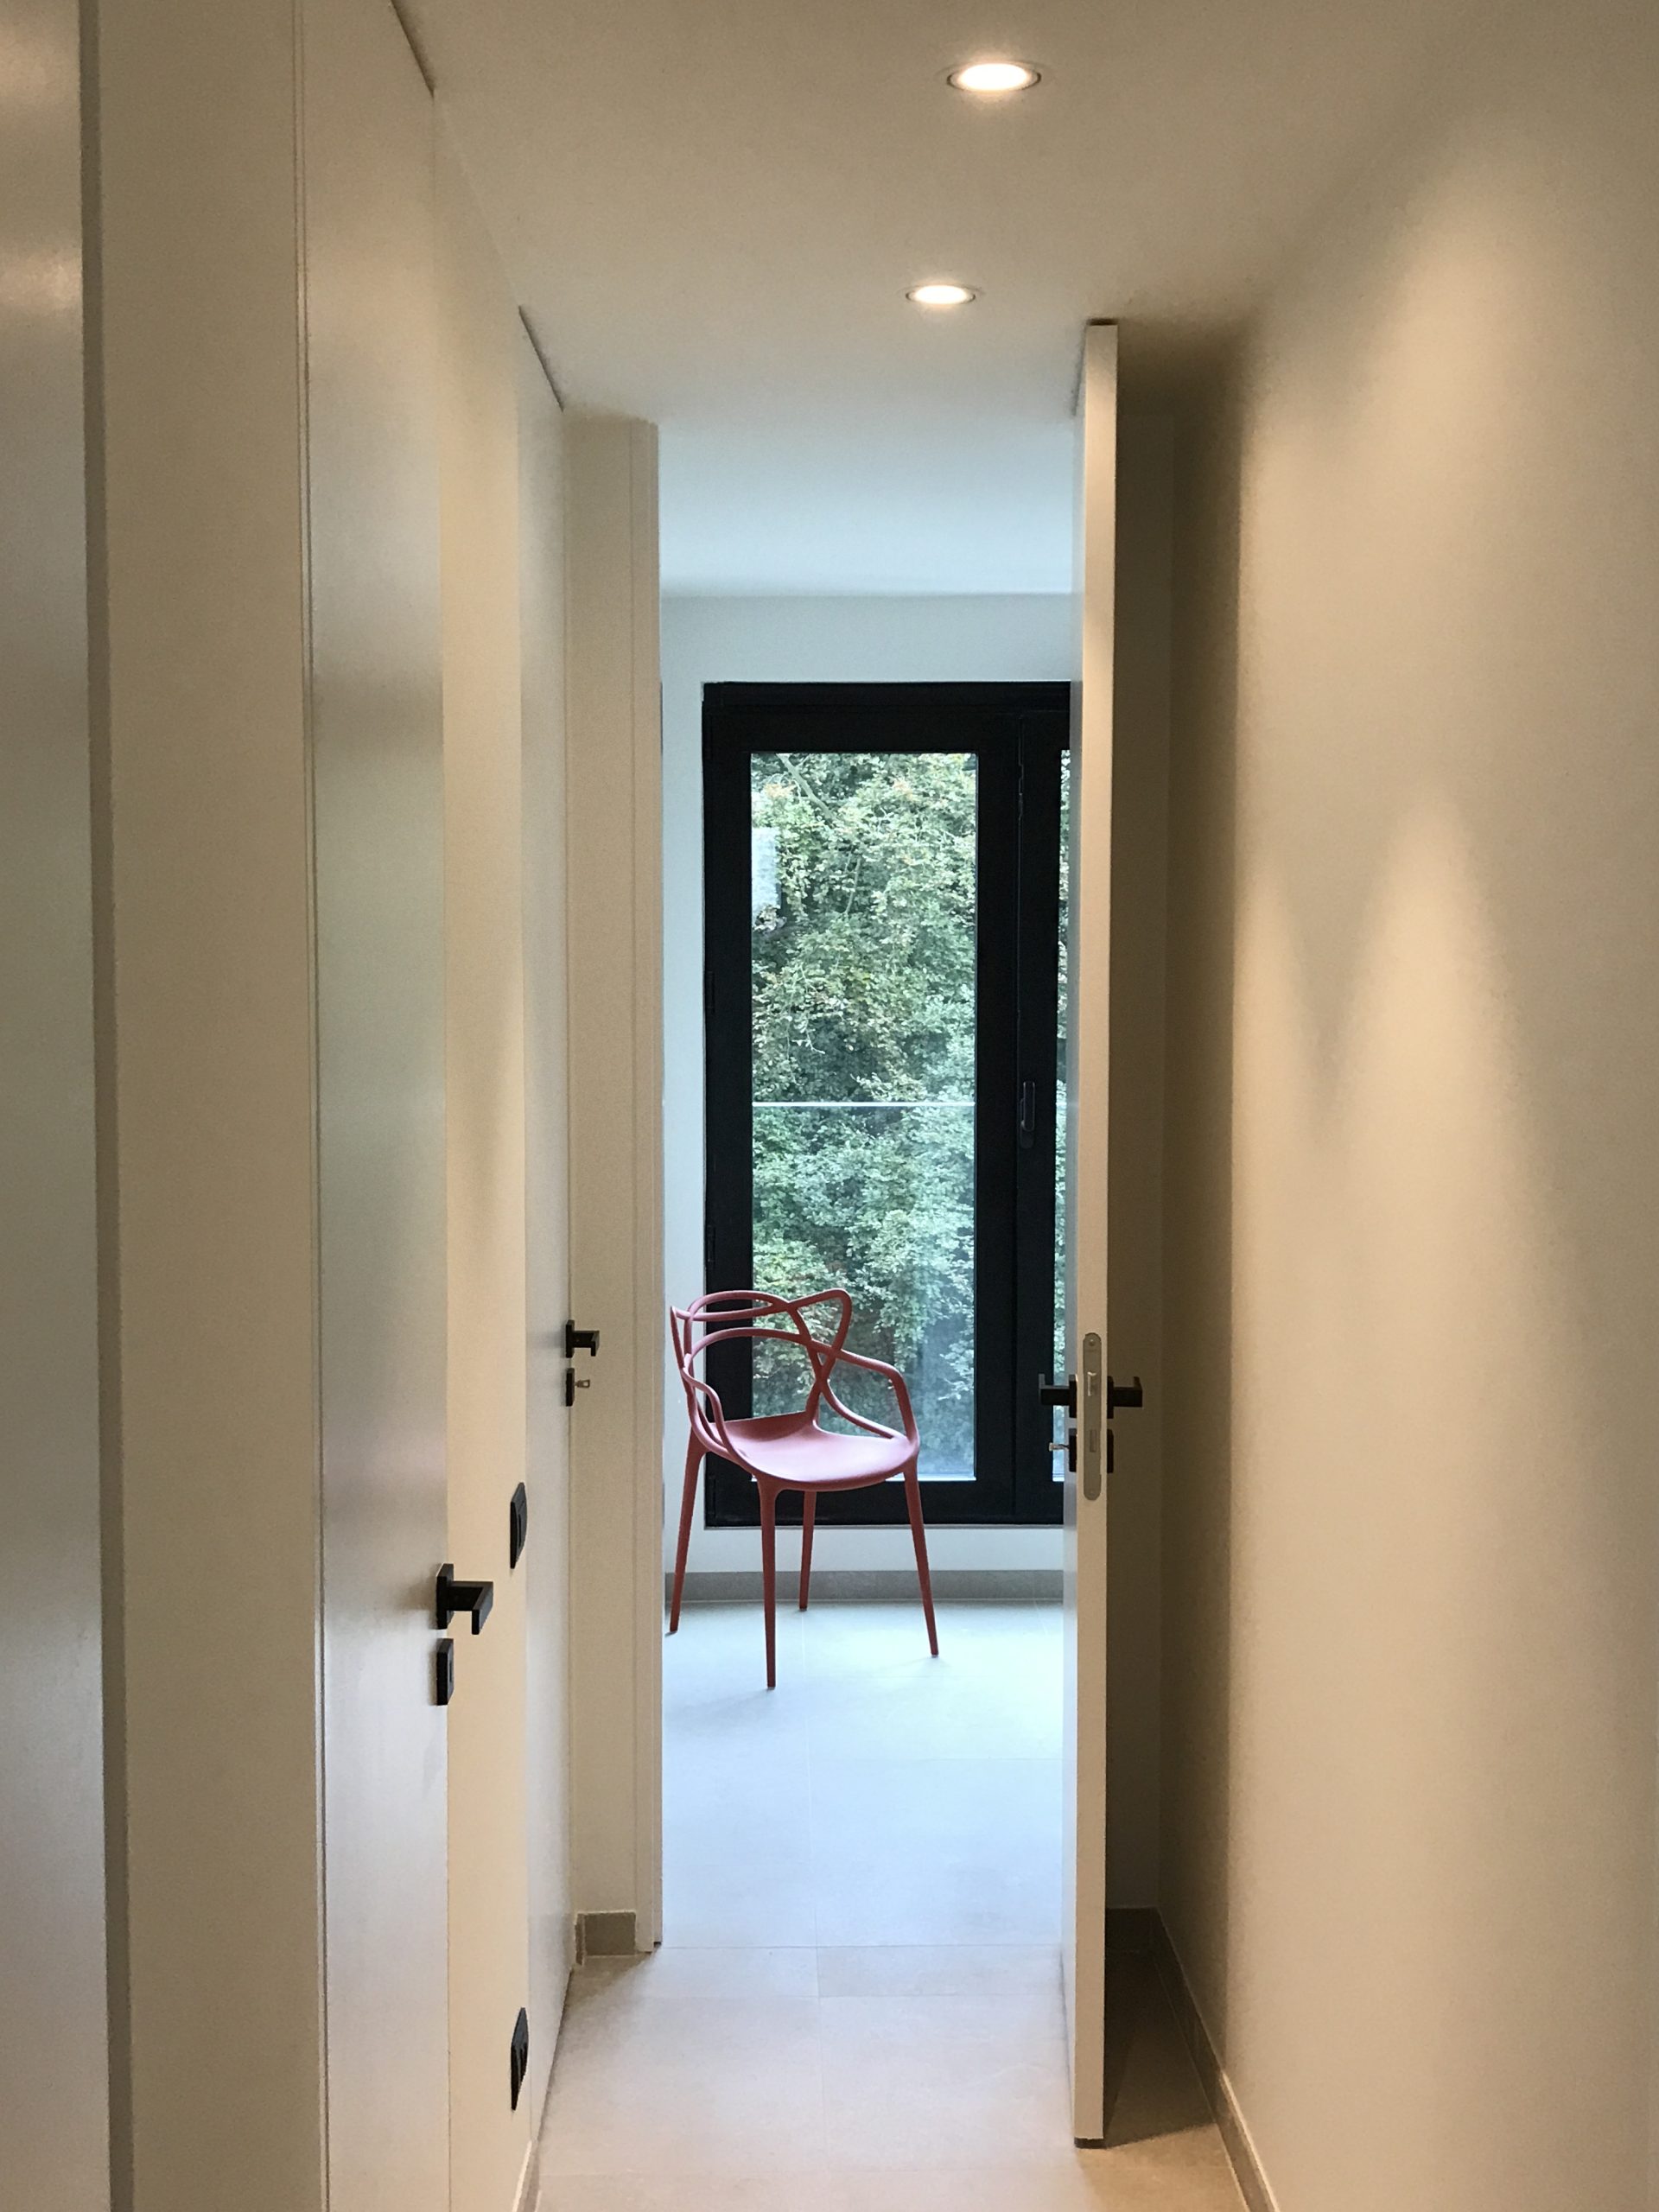 Bedroom - 1-bedroom apartment for rent in Ghent